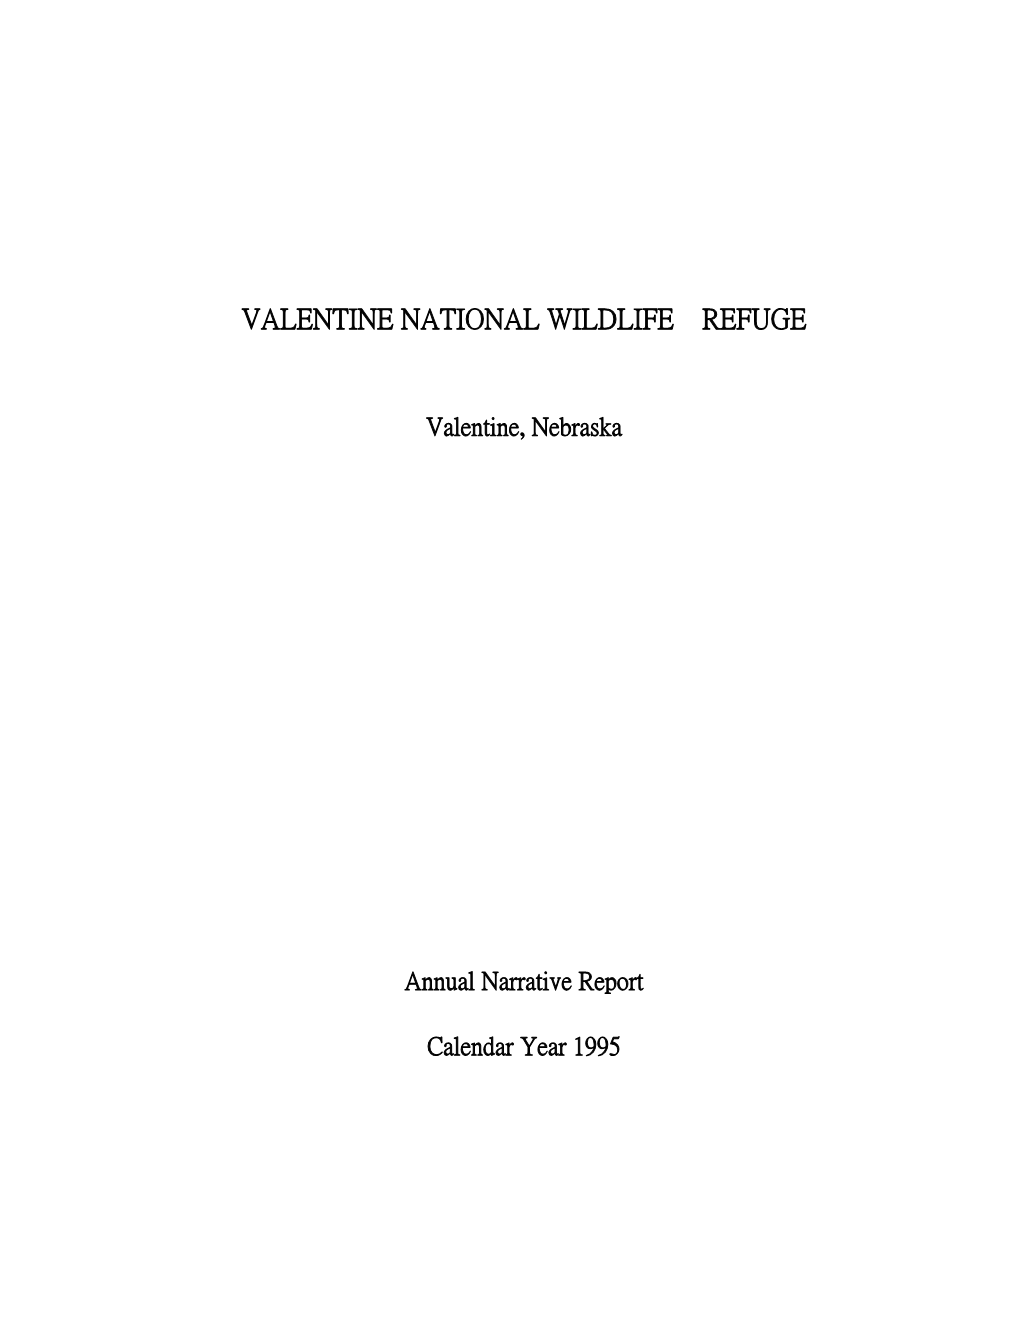 1995 Valentine NWR Annual Narrative Report